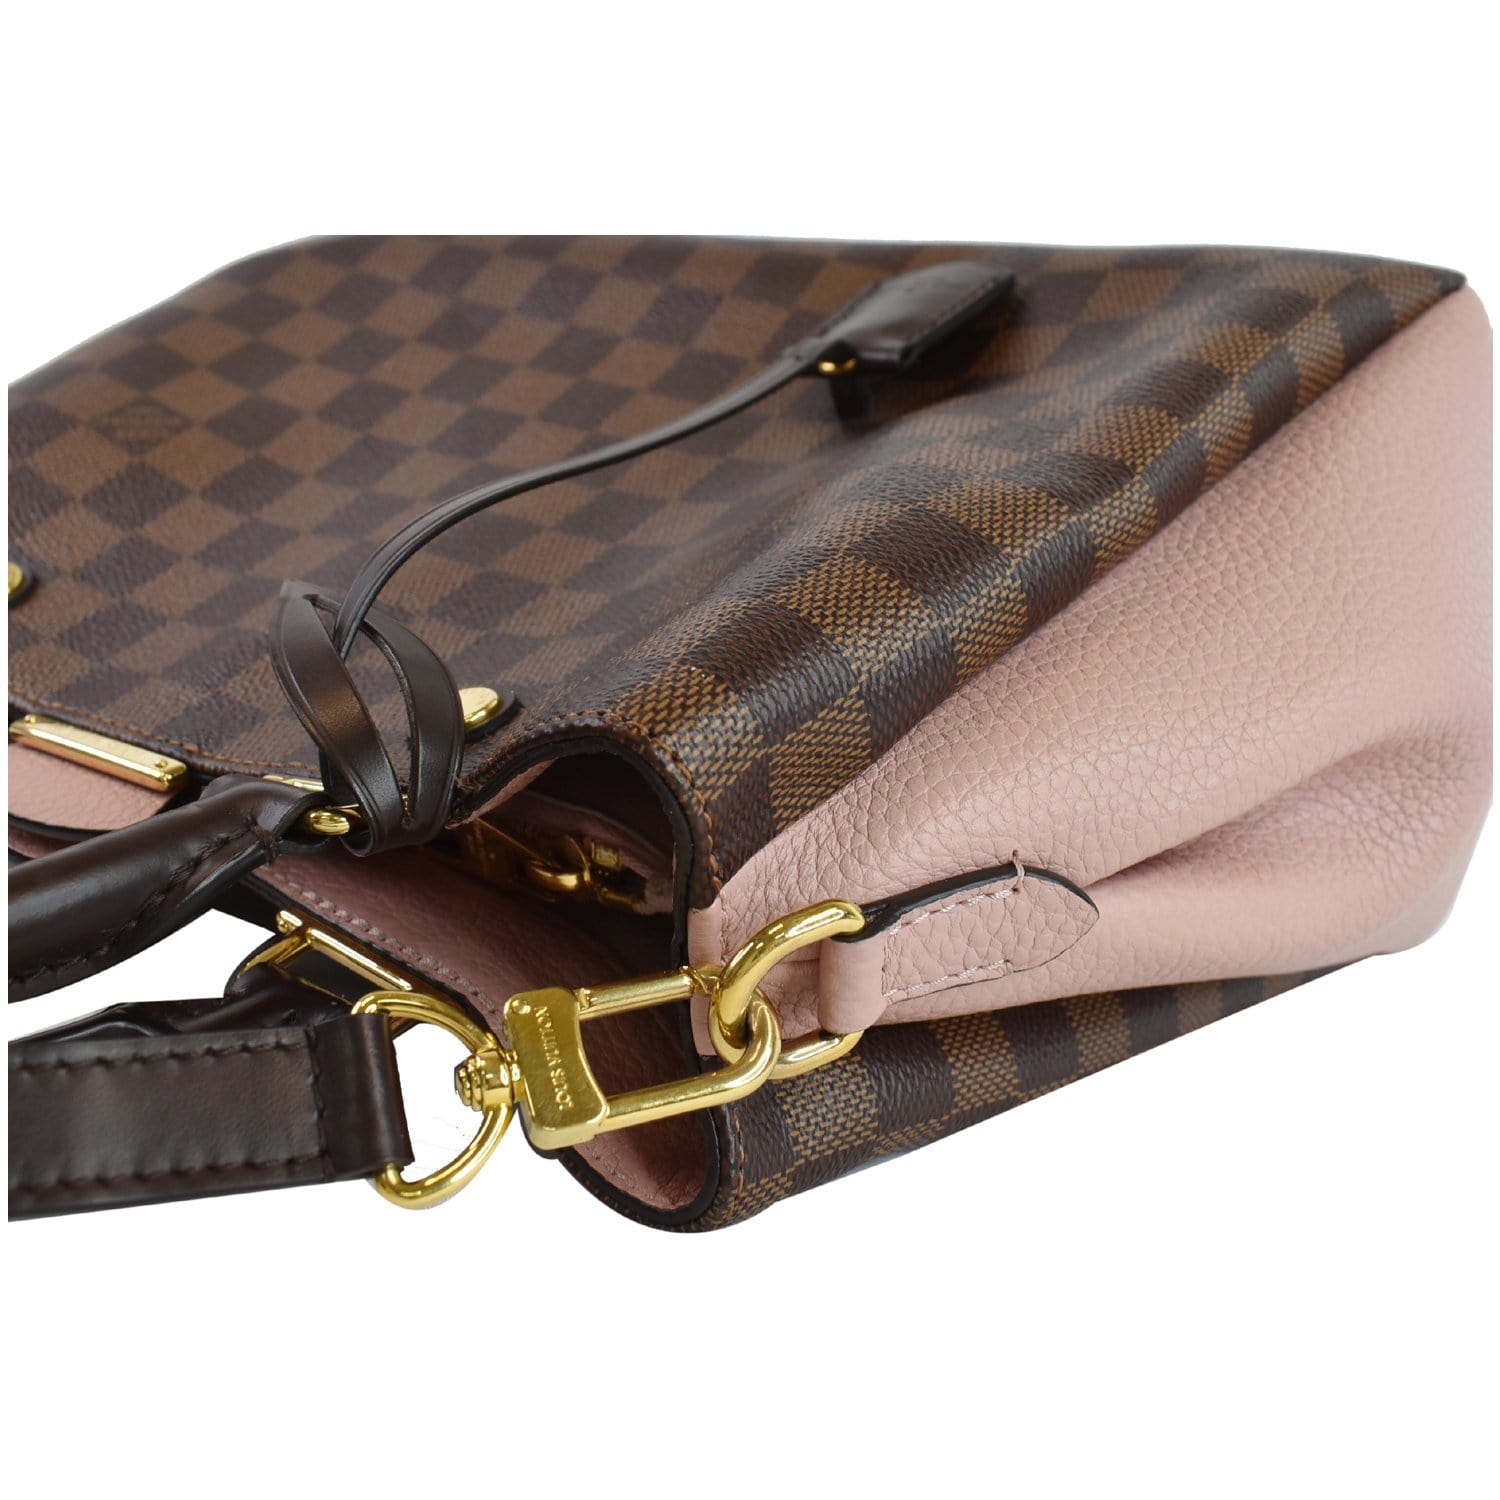 Louis Vuitton Damier Brittany 2WAY shoulder bag